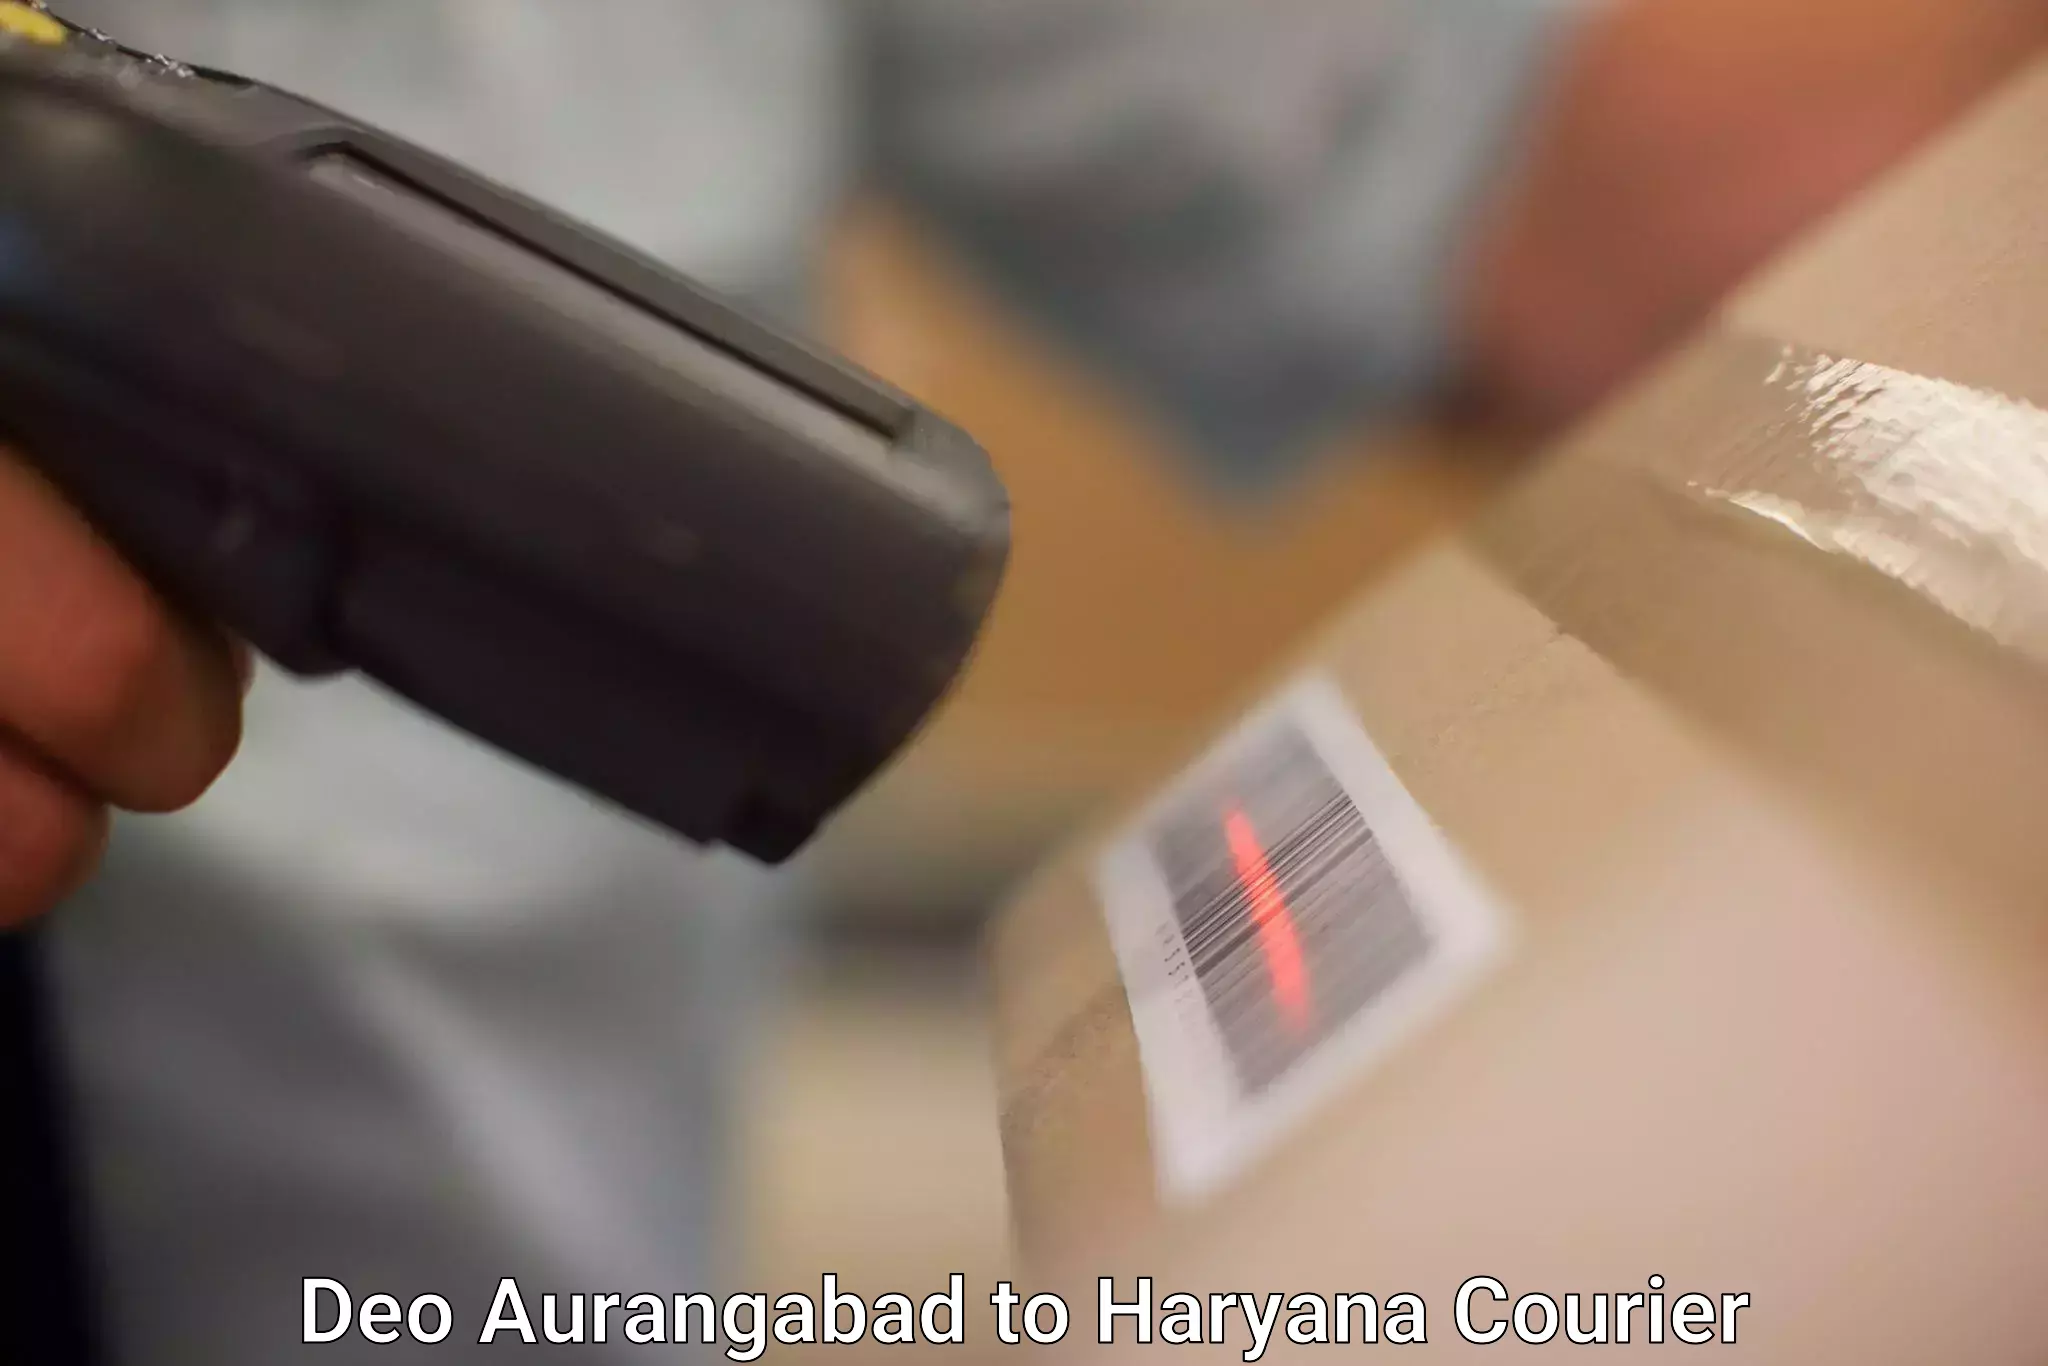 Special handling courier Deo Aurangabad to Haryana